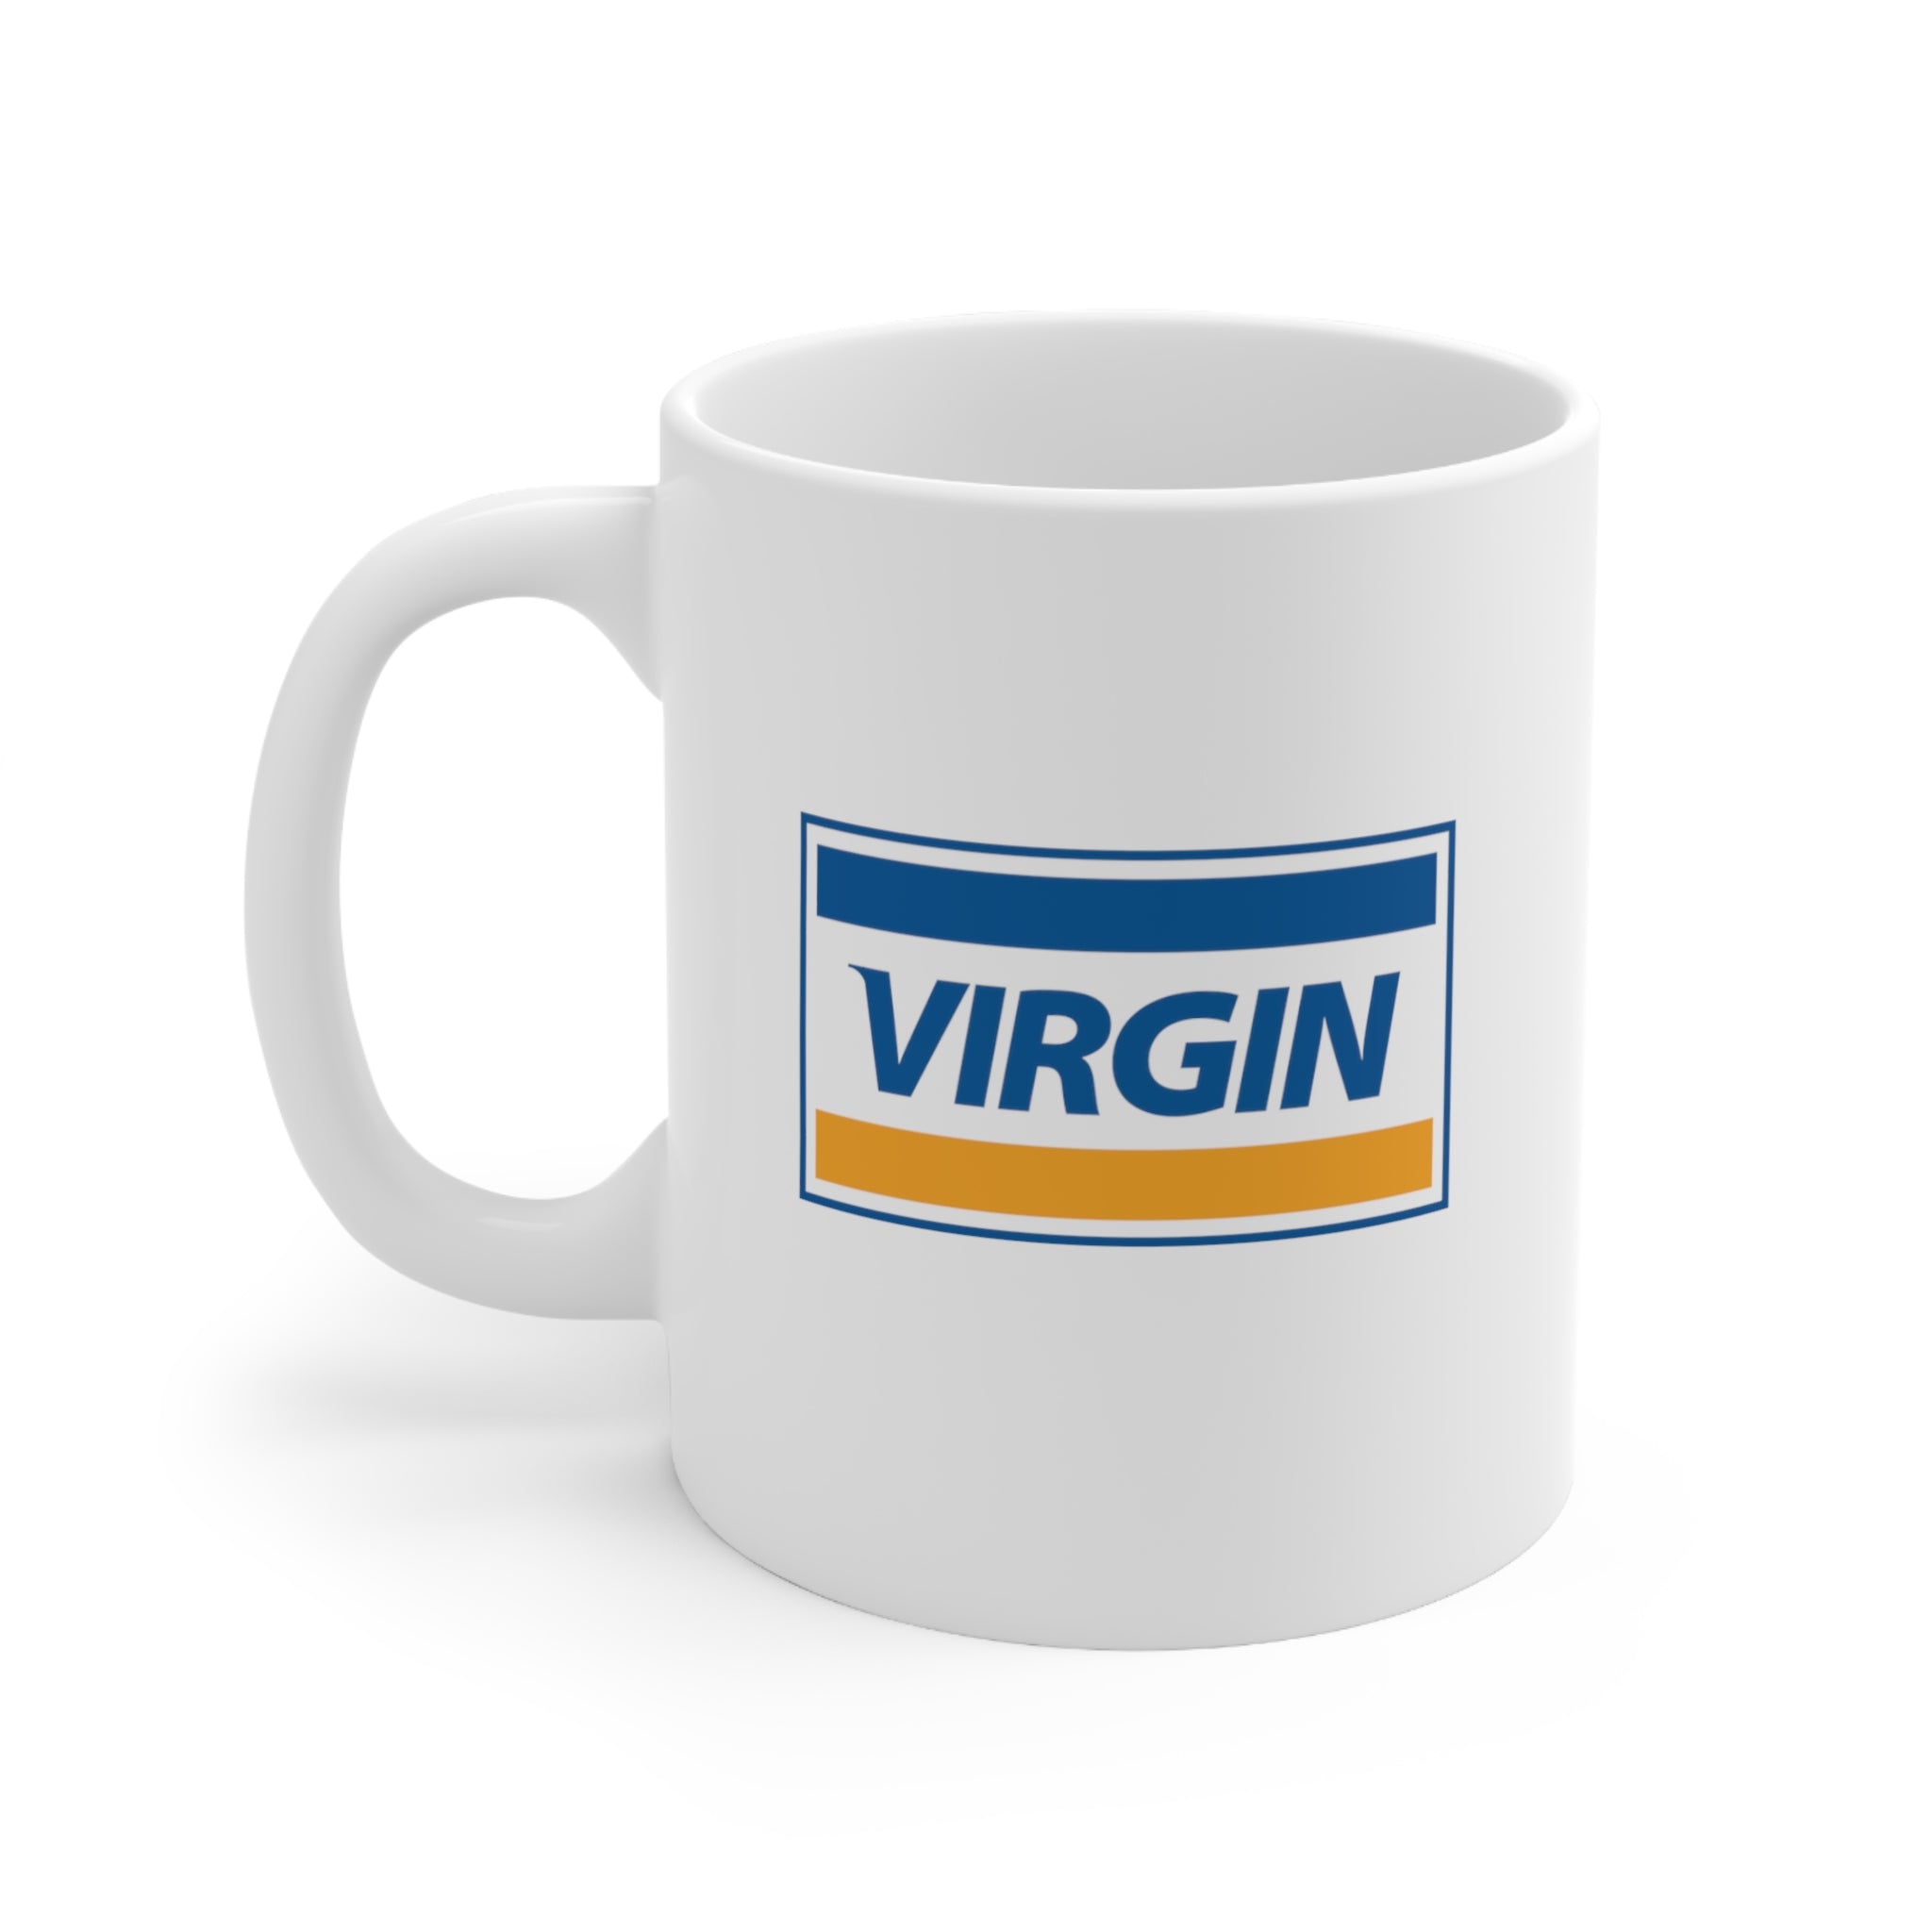 Virgin Mug